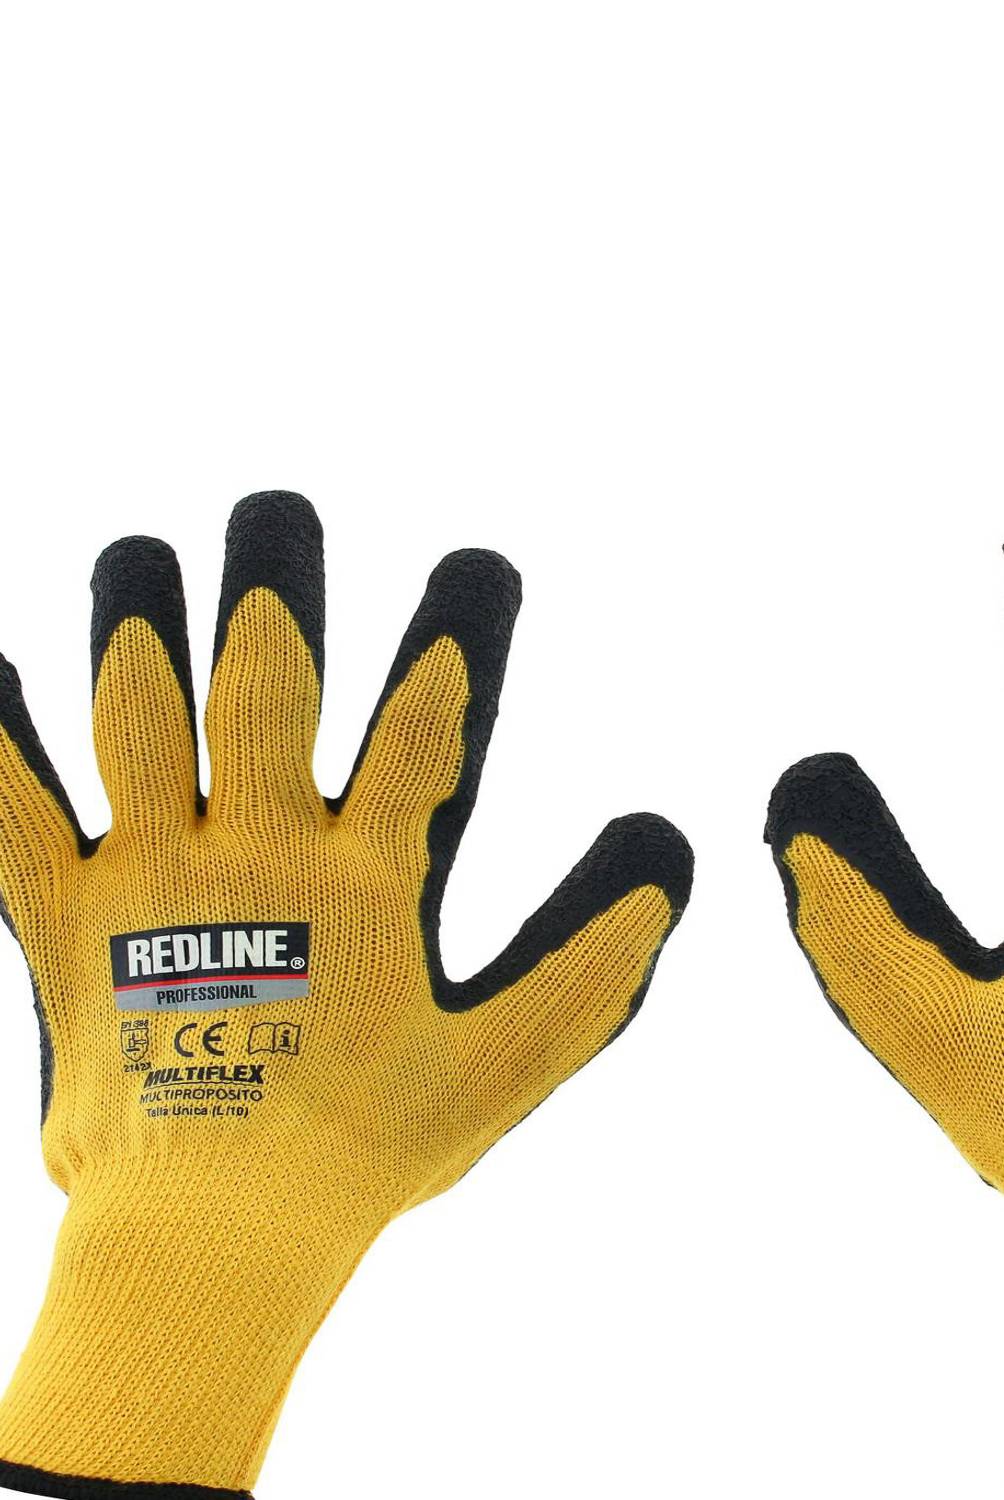 REDLINE - Guante multiflex multiuso algodón palma látex amarillo negro